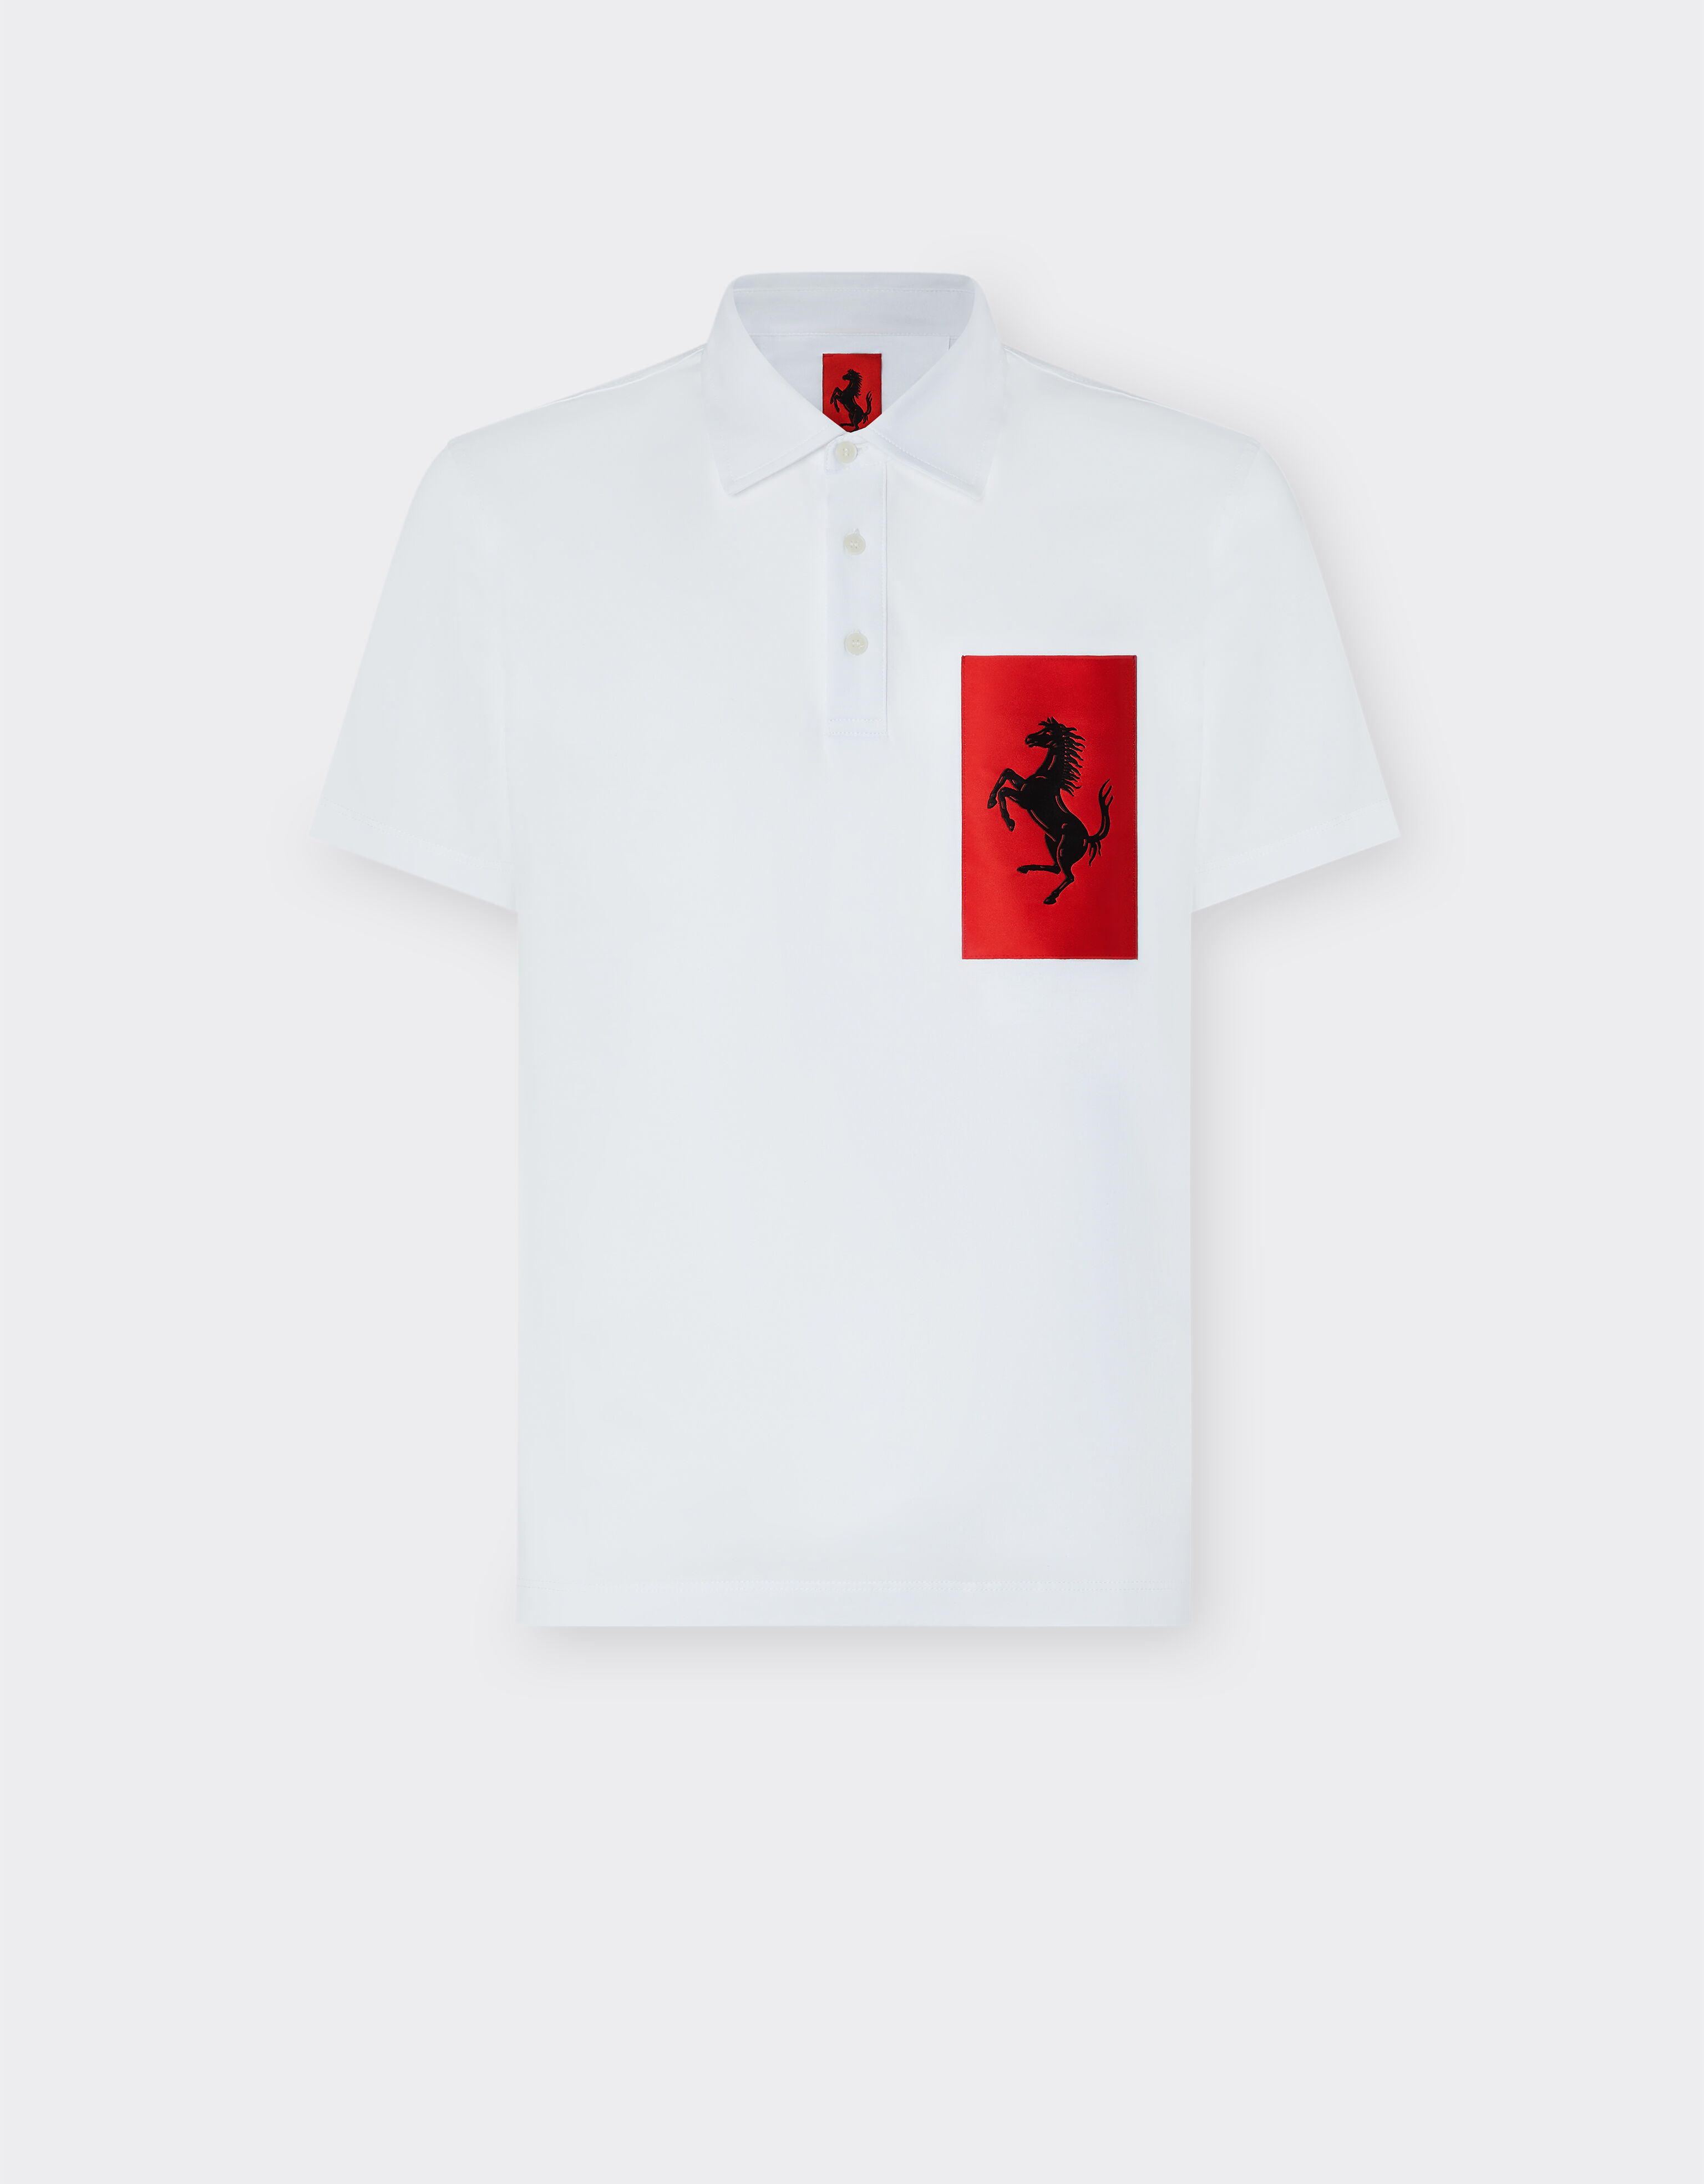 Ferrari Cotton polo shirt with Prancing Horse pocket Black 48515f